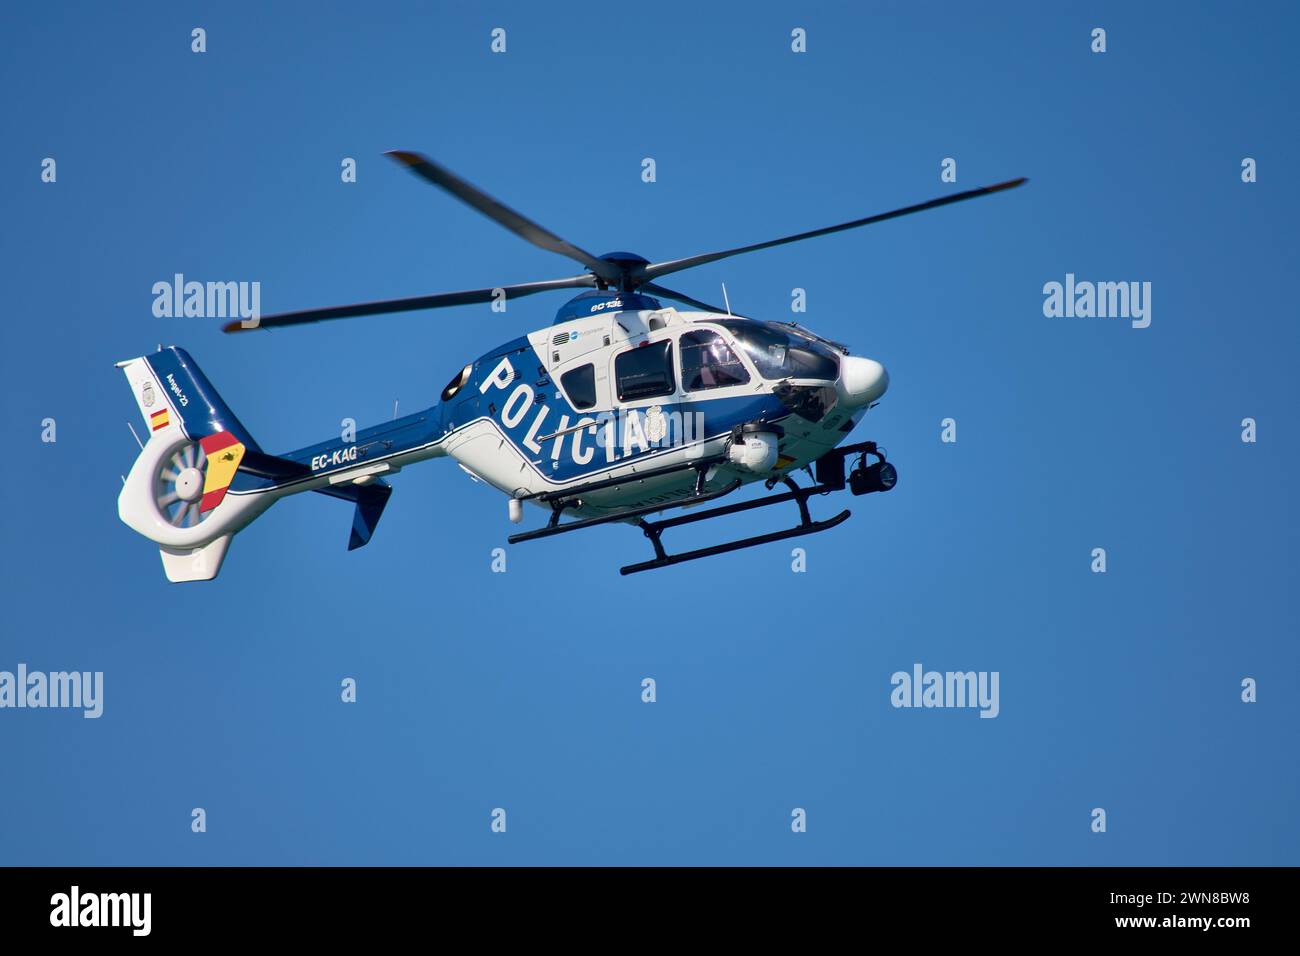 Vigo, Galicia, Spain; May,04,2021; The Angel23 helicopter of the National Police patrols the skies of Vigo daily Stock Photo